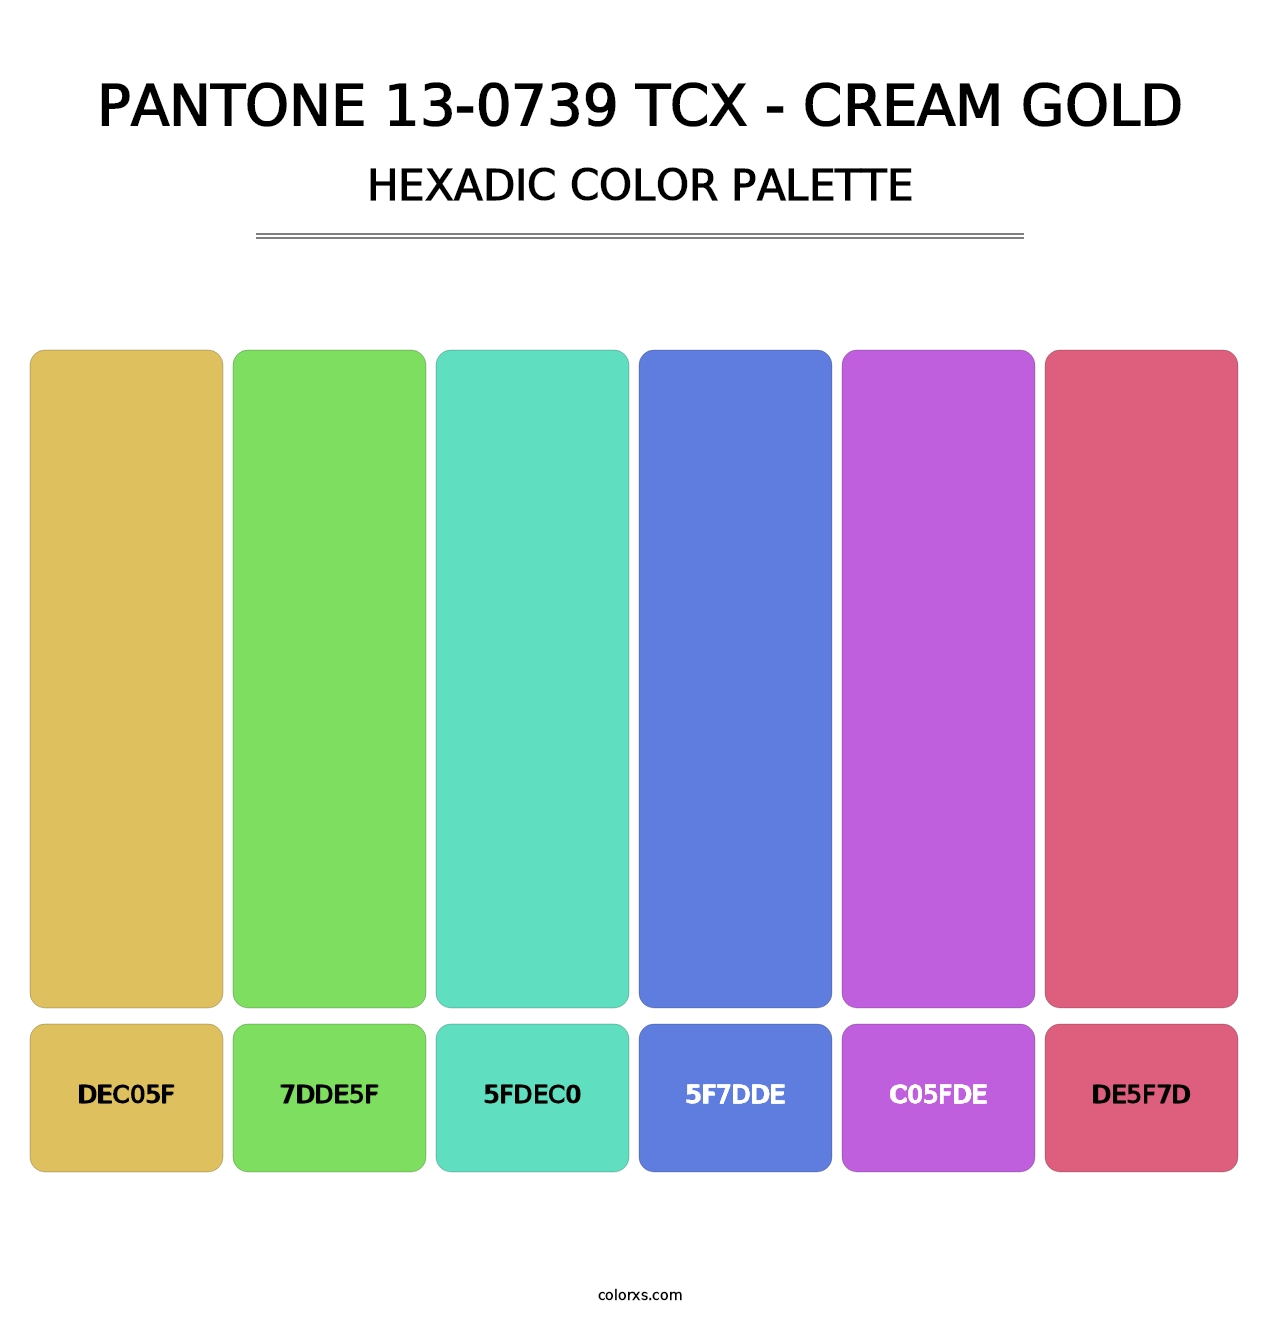 PANTONE 13-0739 TCX - Cream Gold - Hexadic Color Palette